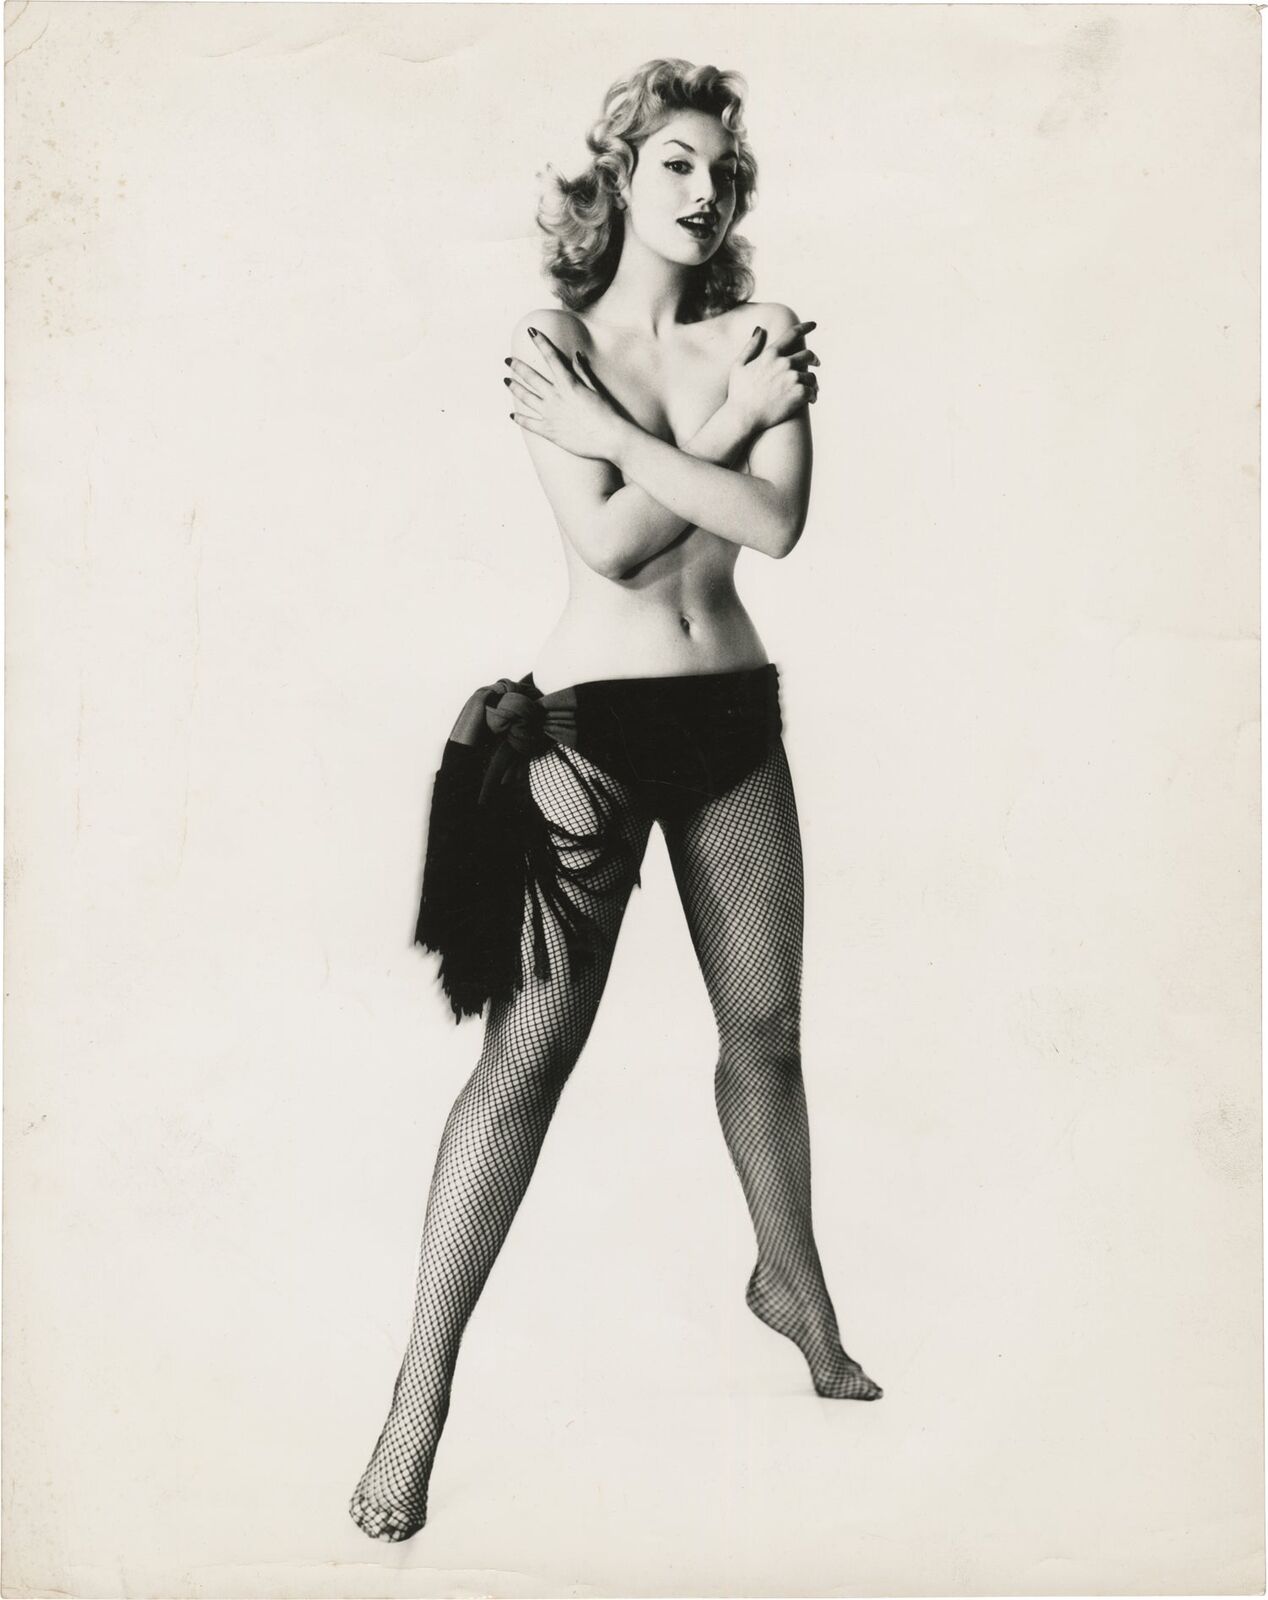 ORIGINAL OVERSIZE PHOTOGRAPH OF MYLENE DEMONGEOT CIRCA 1957 #158231